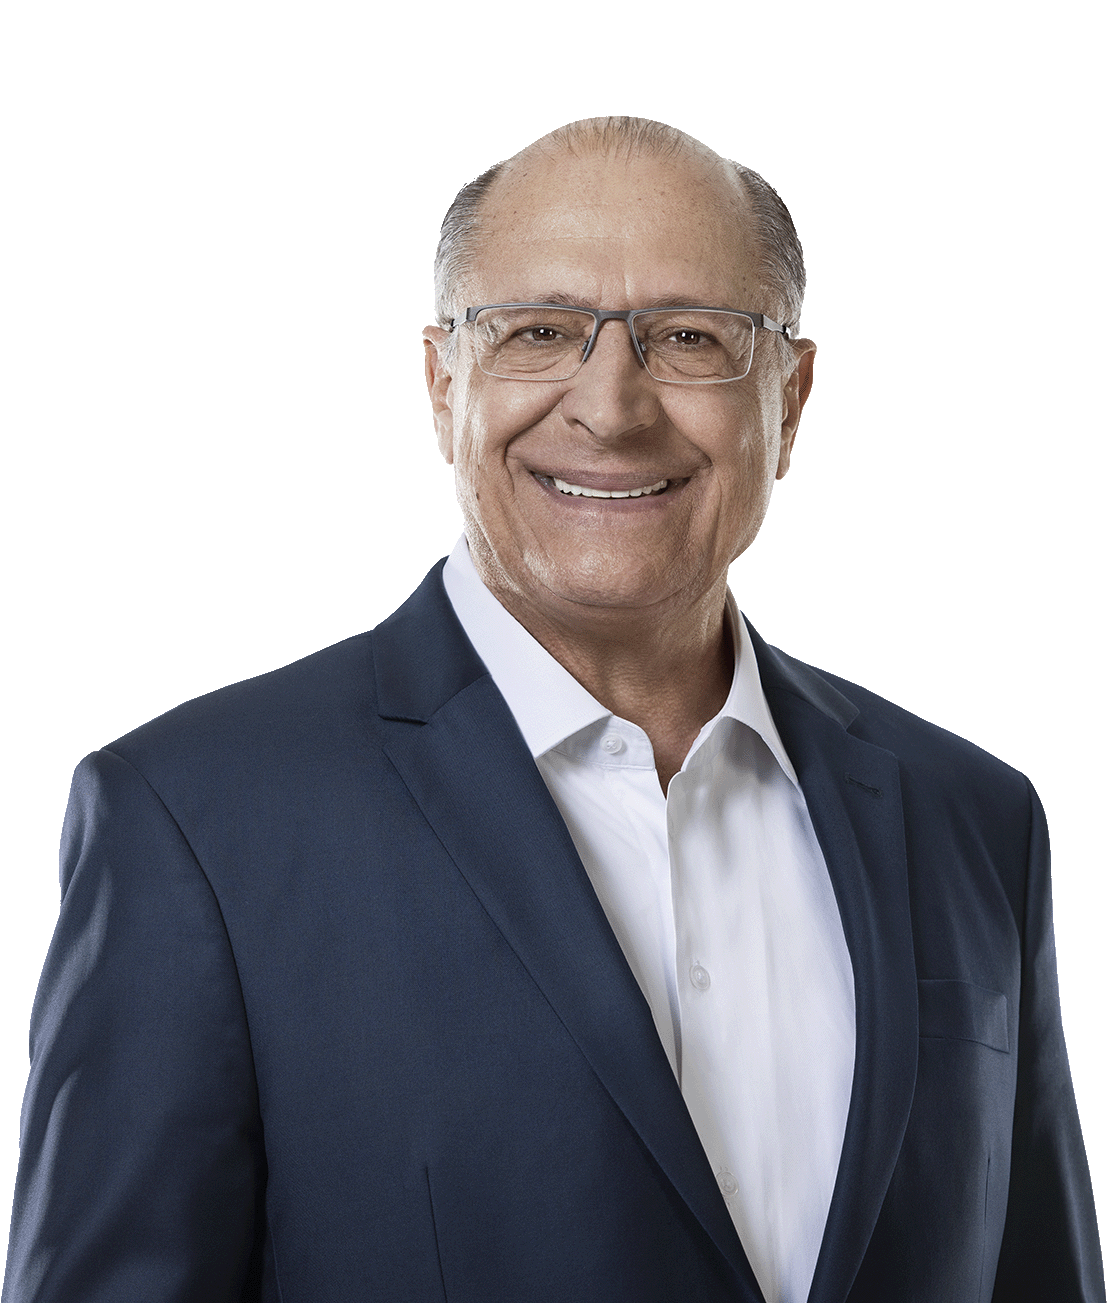 Alckmin